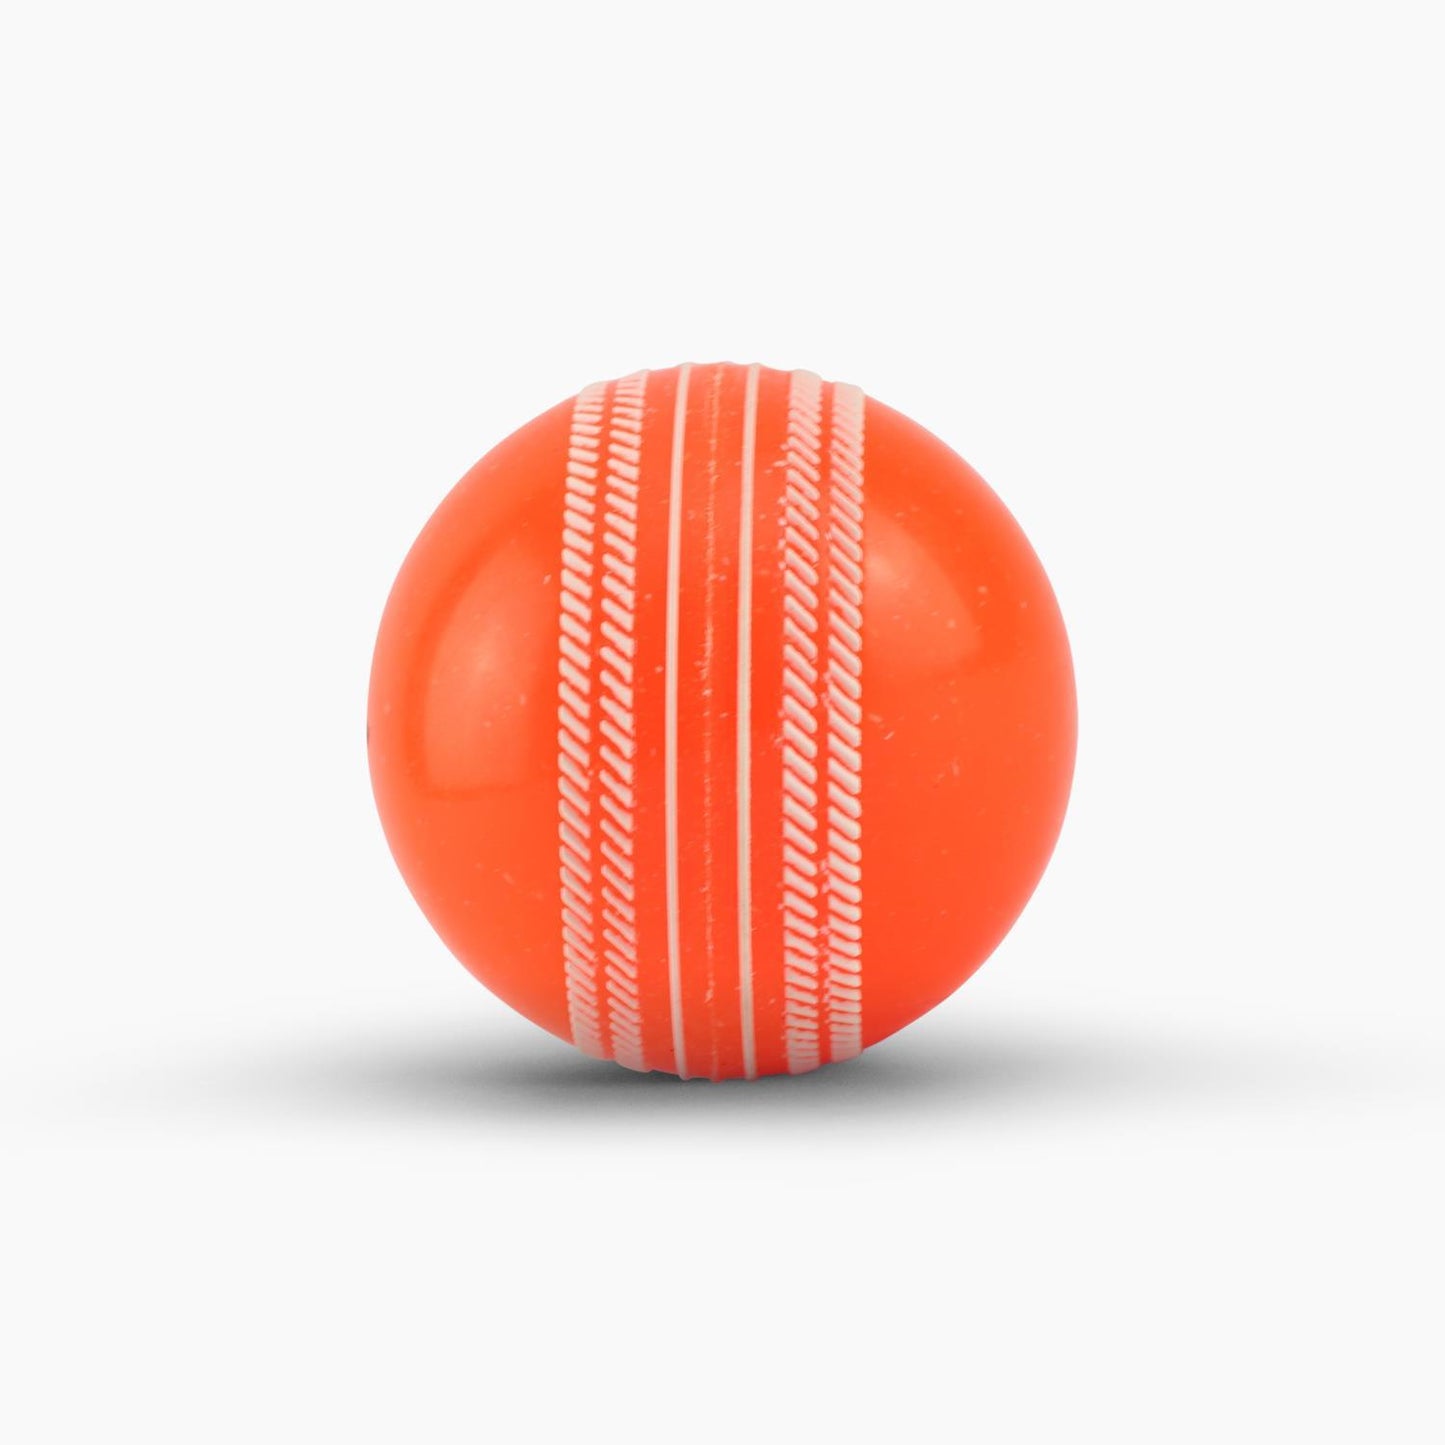 Buy Splay WindBall - Orange (6 Pack)-Cricket Ball-Splay (UK) Limited-Splay UK Online